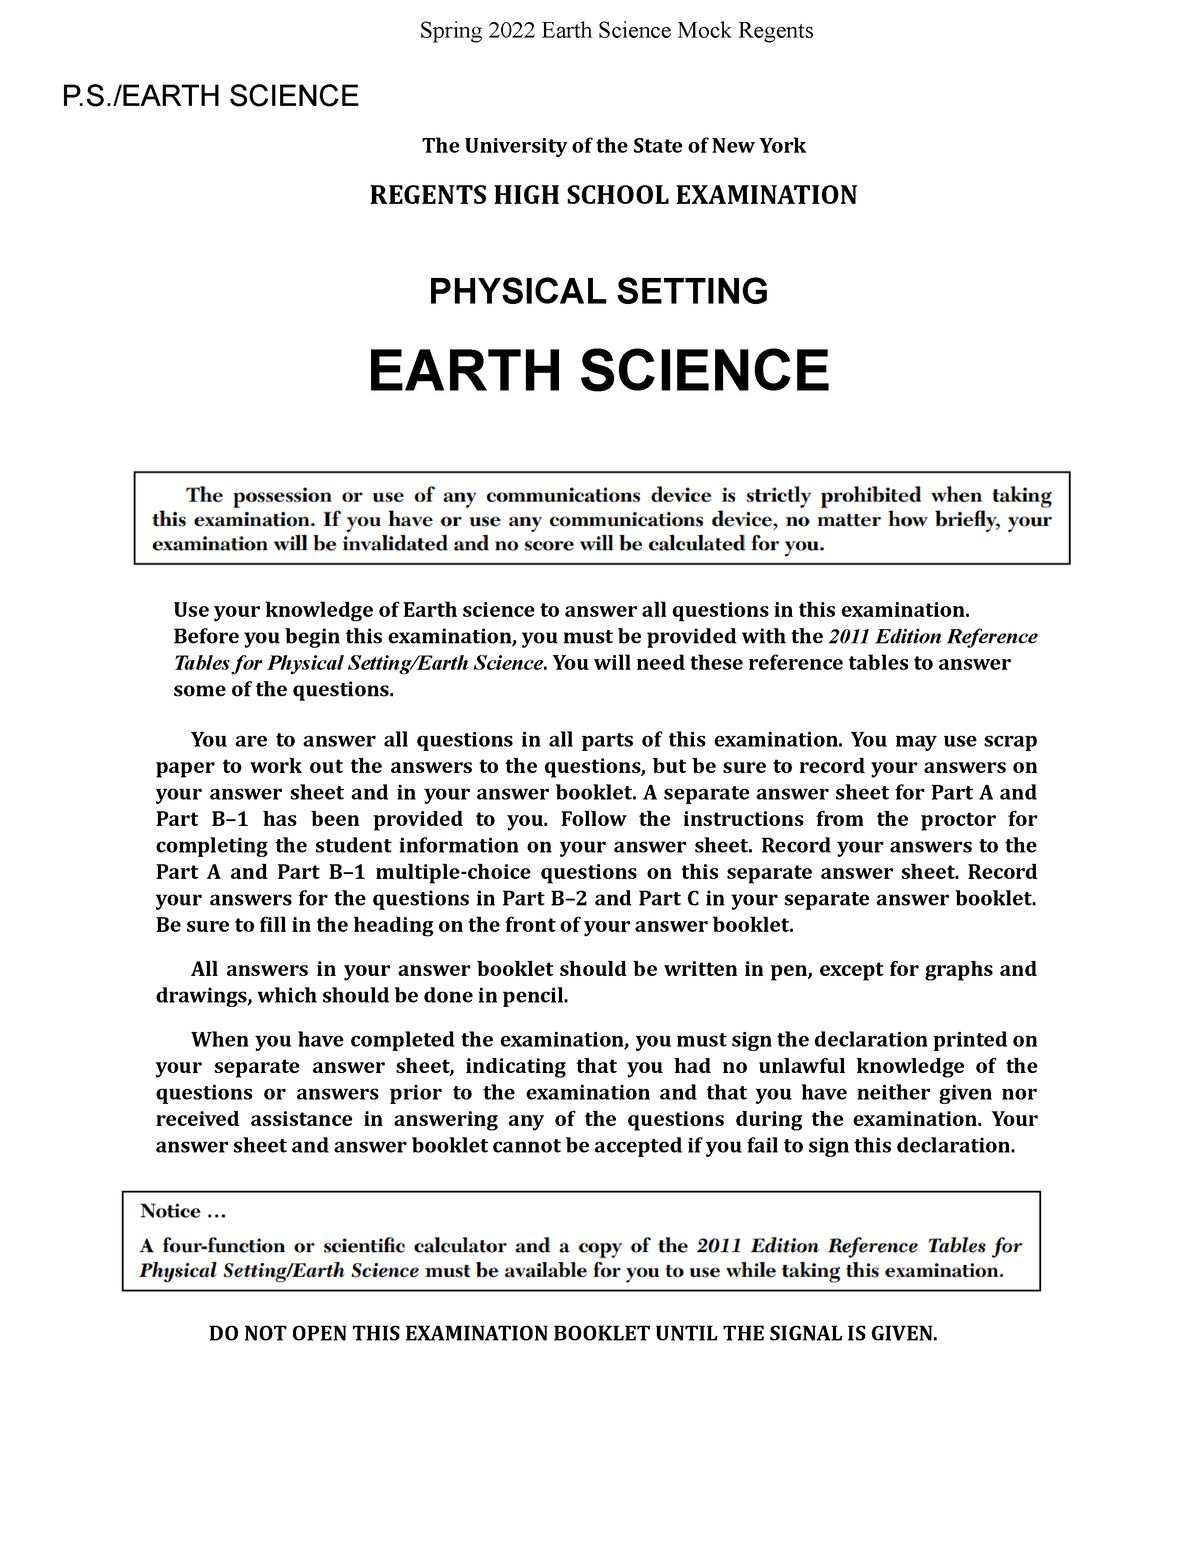 Spring 2022 Mock Regents Exam (Final Version) Spring 2022 Earth